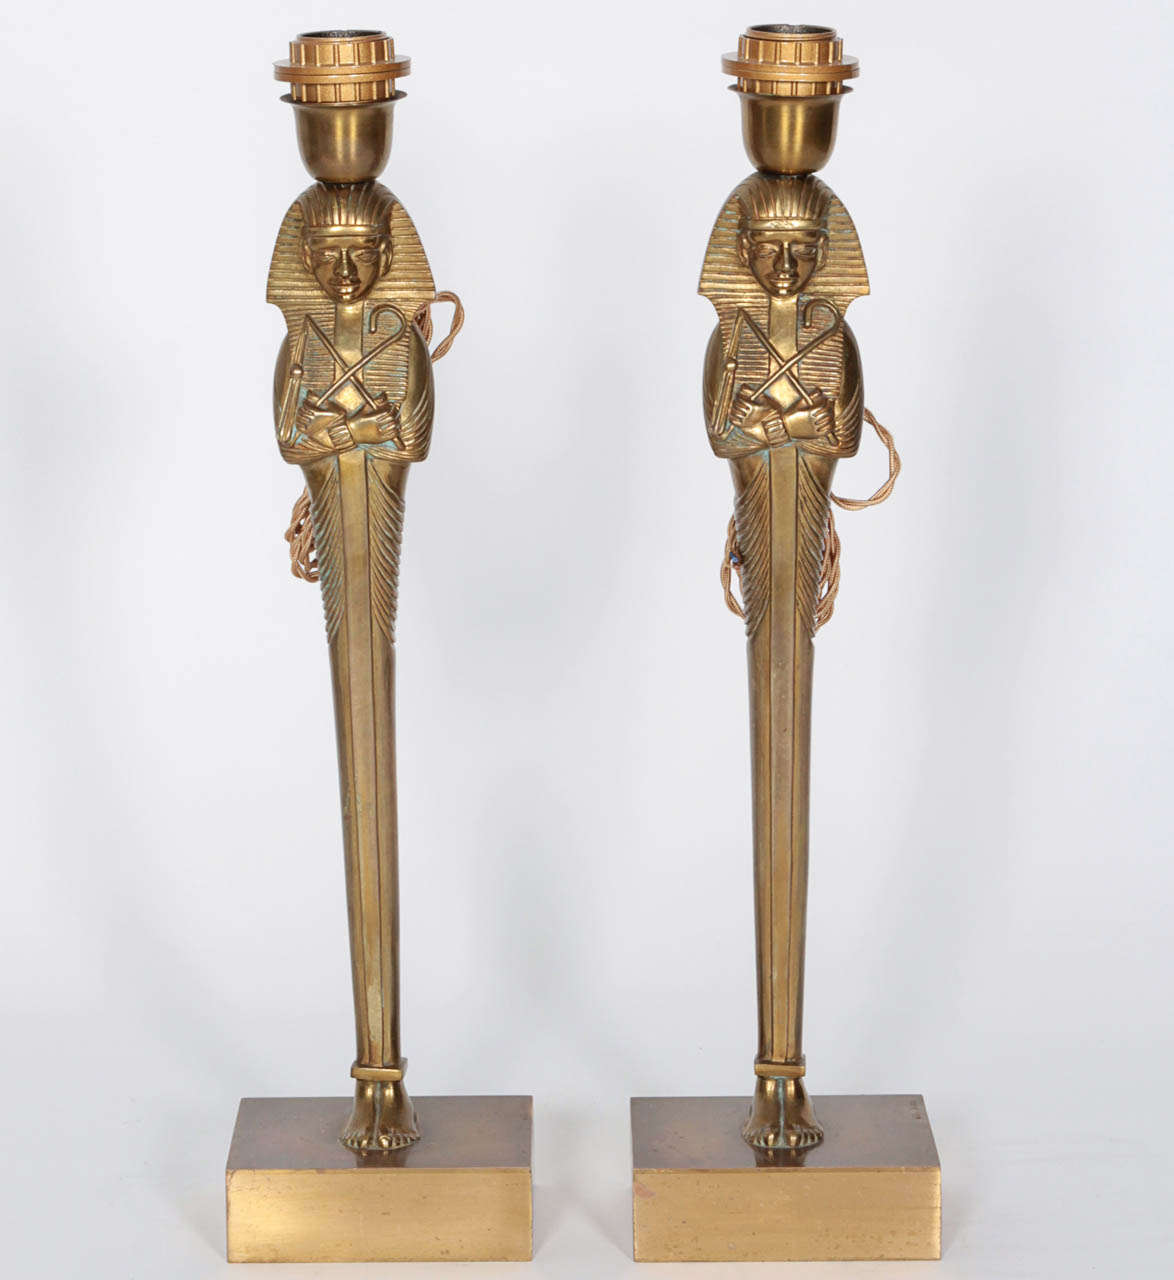 Seltenes Paar ägyptischer Tischlampen aus massiver Bronze.